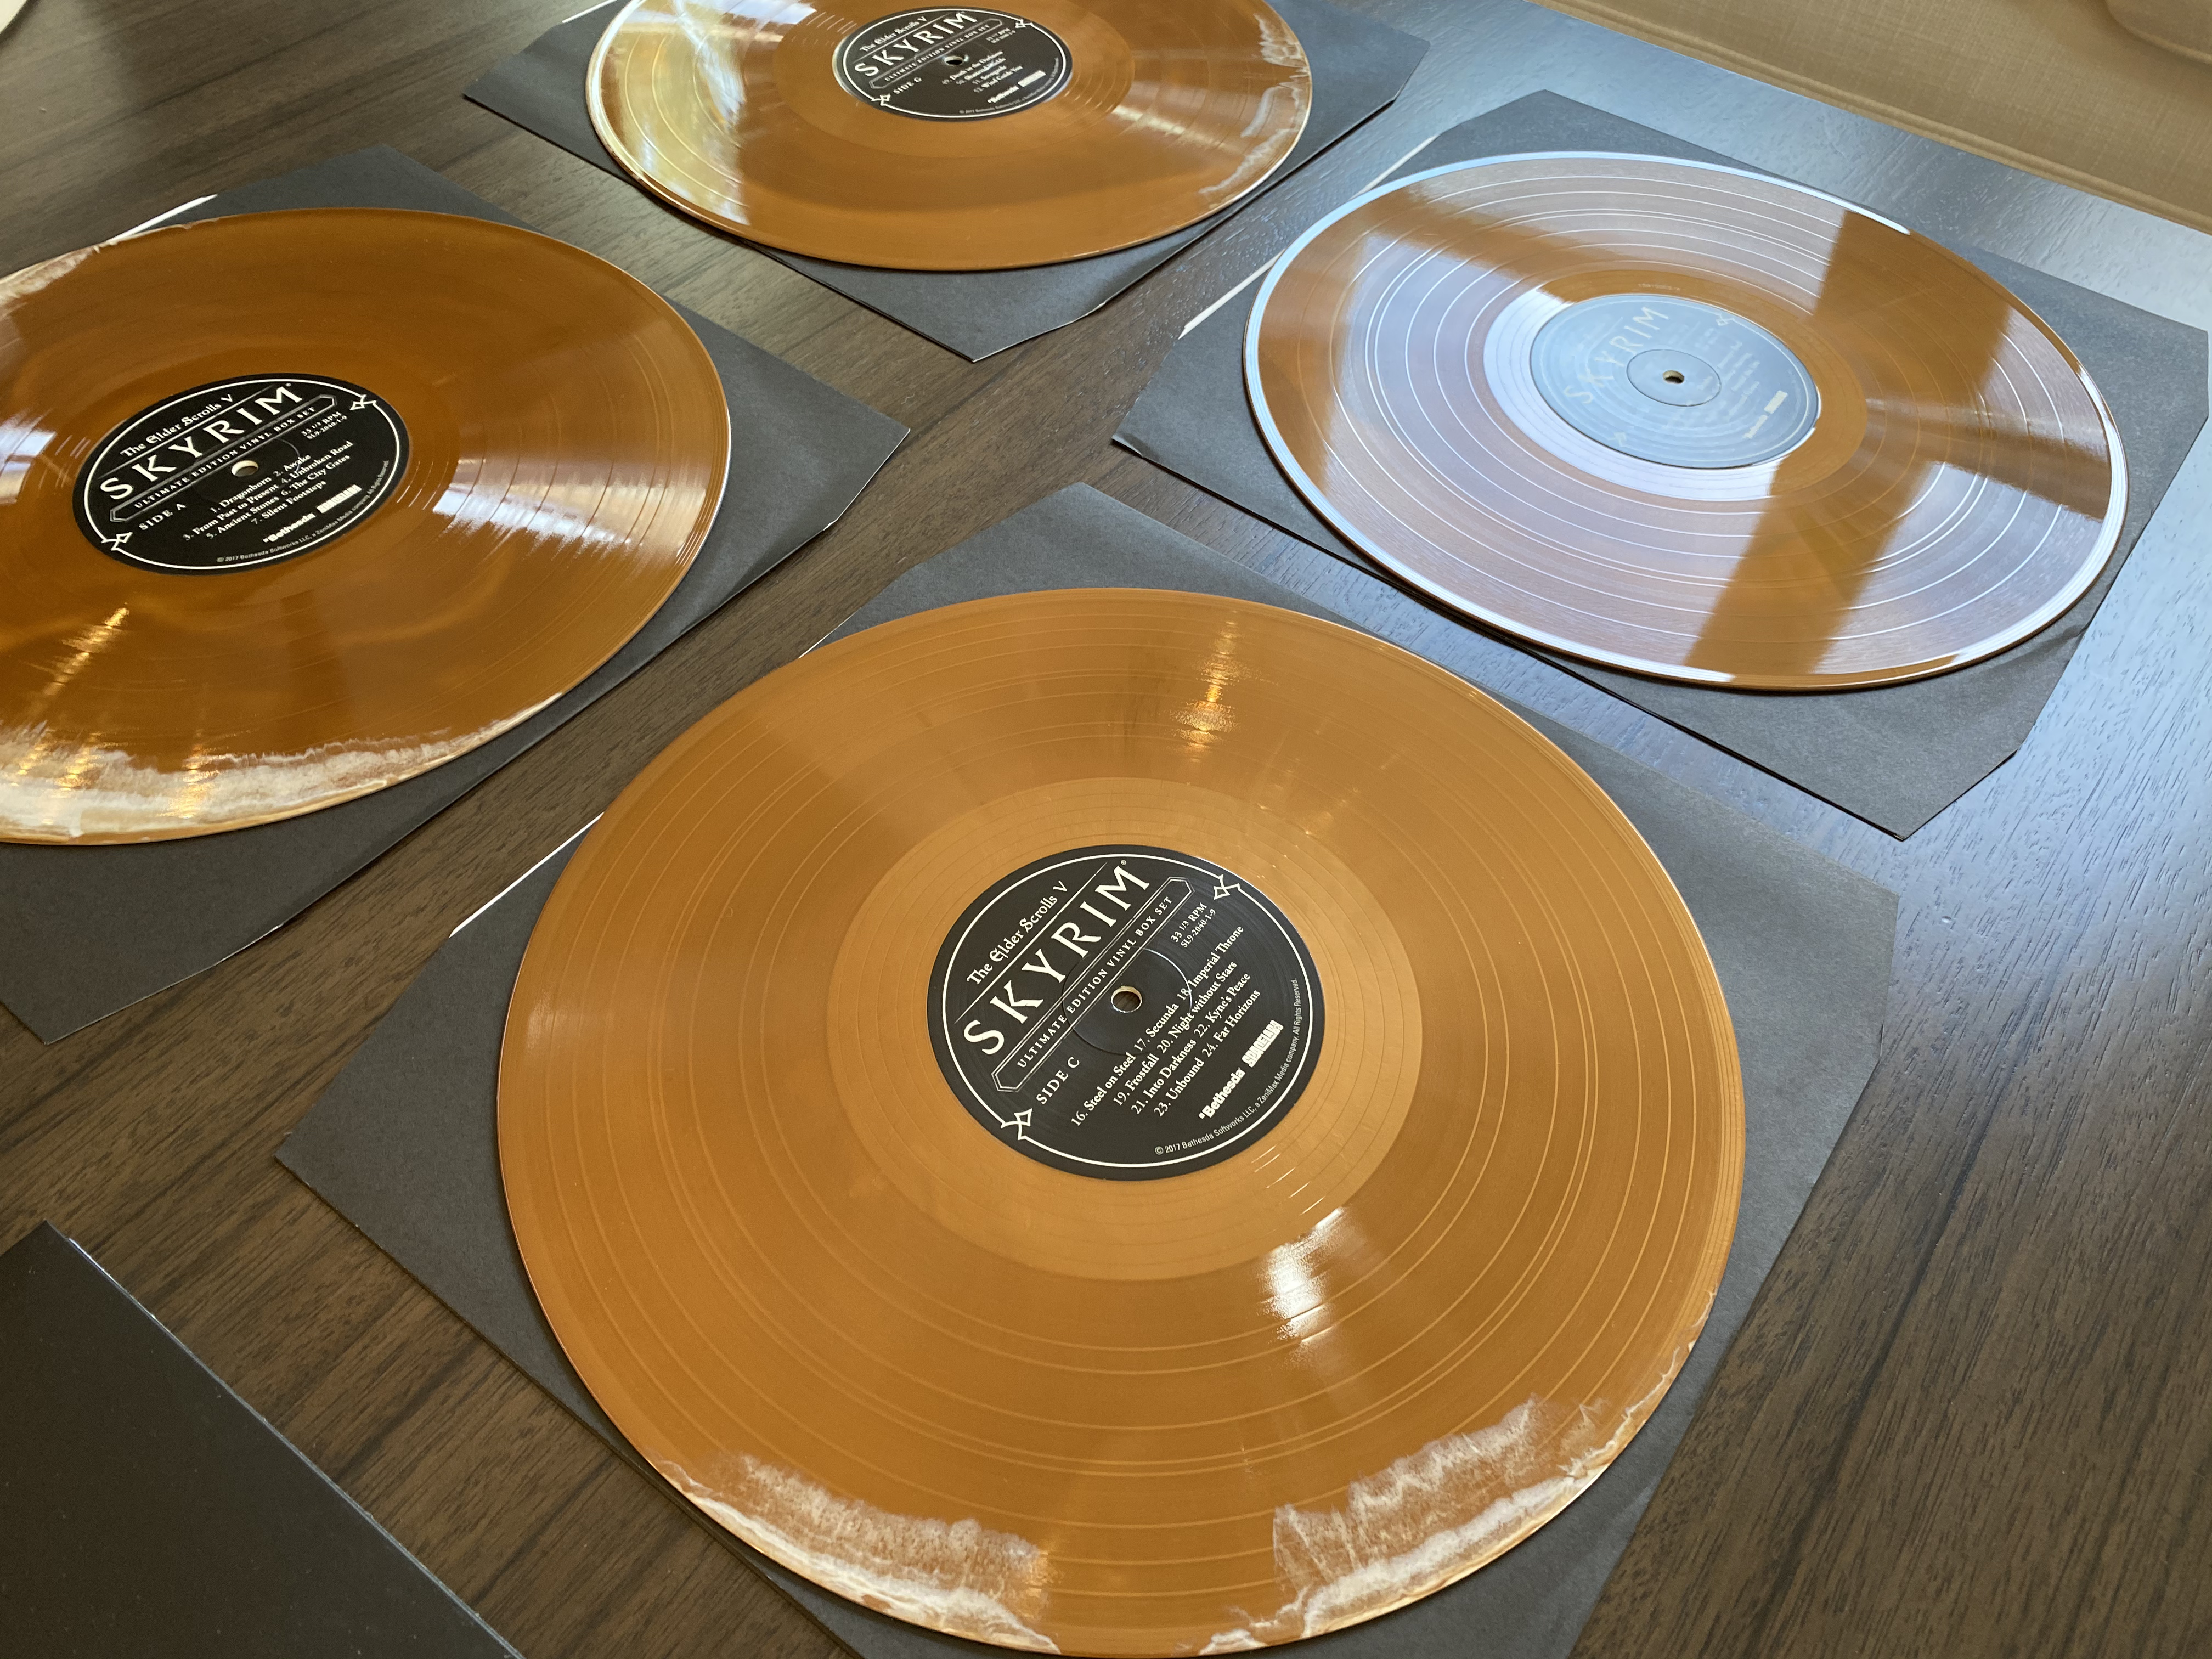 Kennon-Green Elder Scrolls V Skyrim Ultimate Vinyl Edition 4 LP Box Set Sweet Roll Variant Header